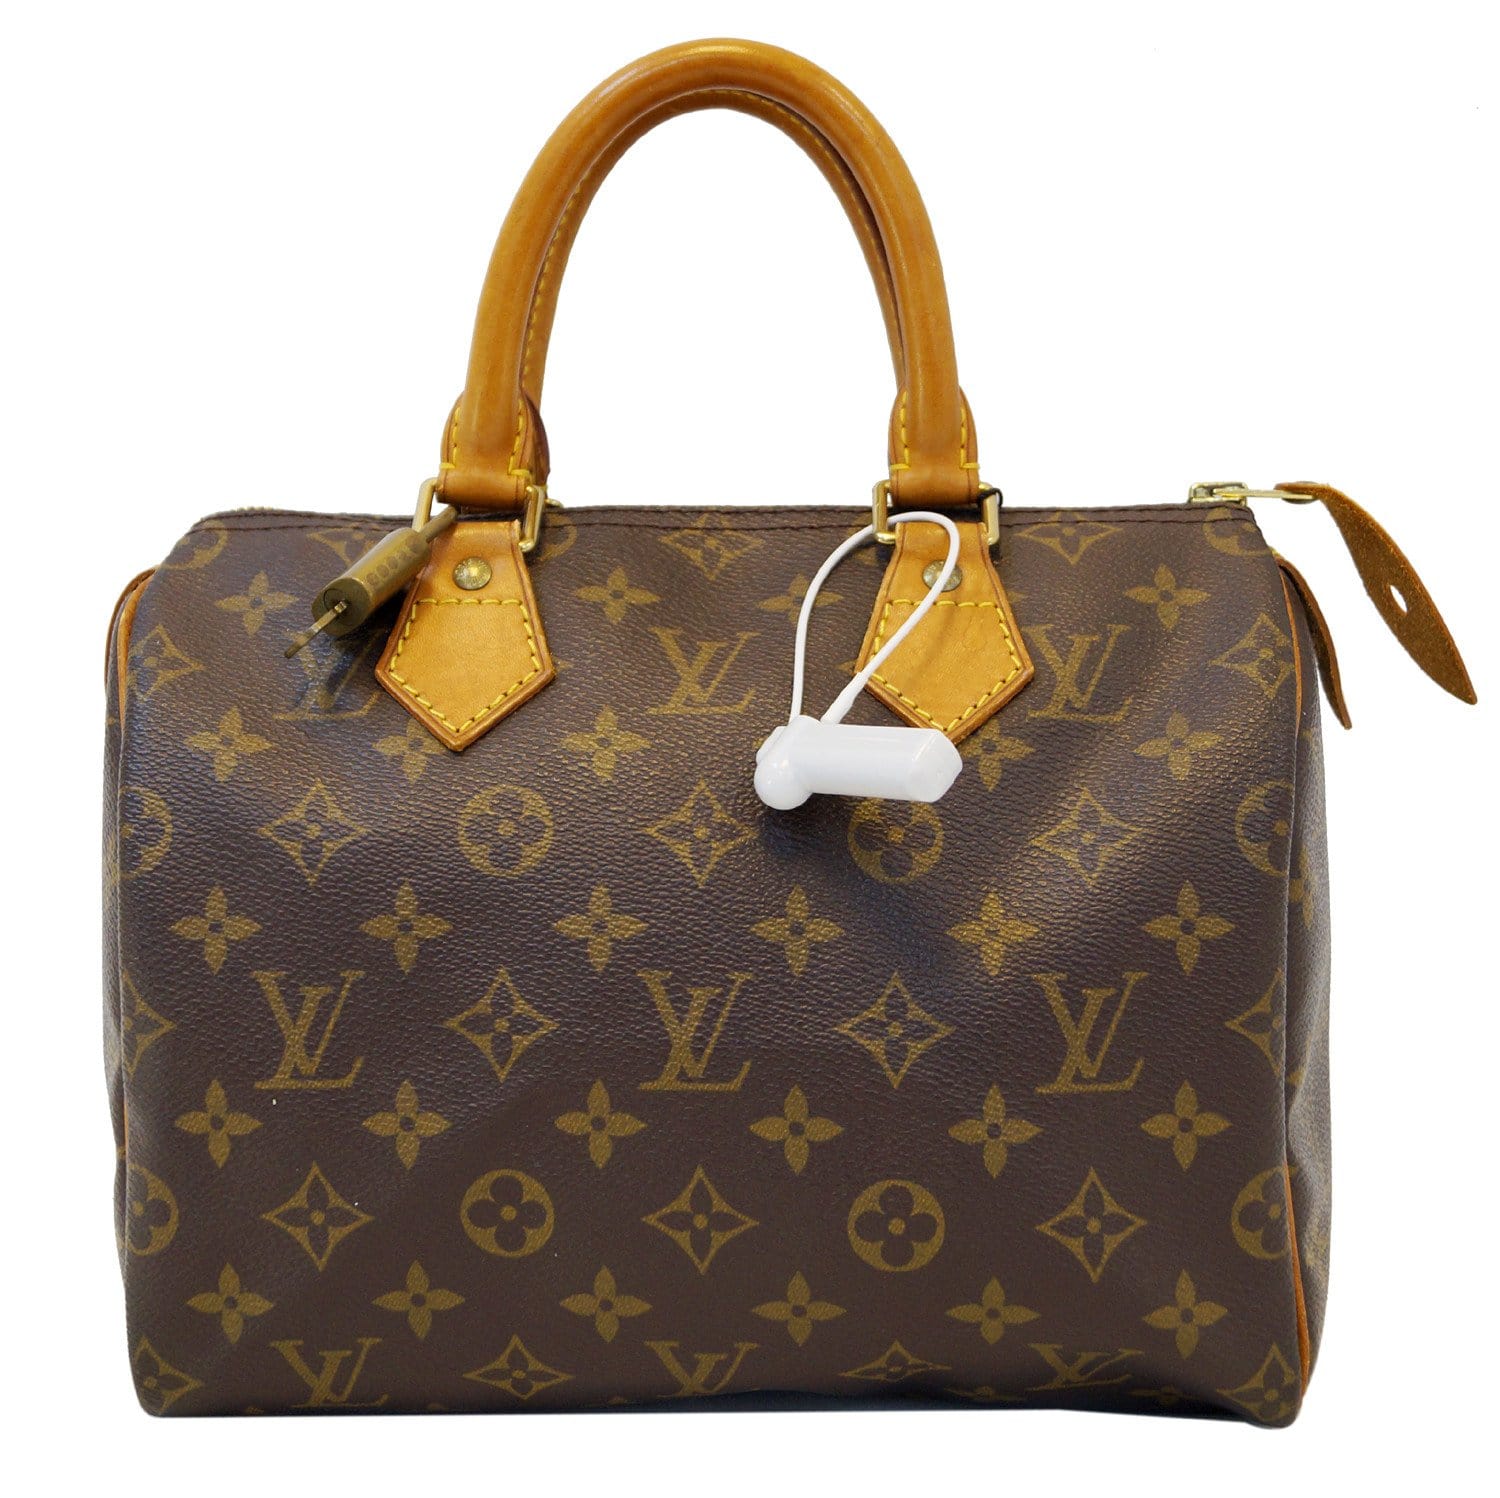 authentic monogram louis vuittons handbags